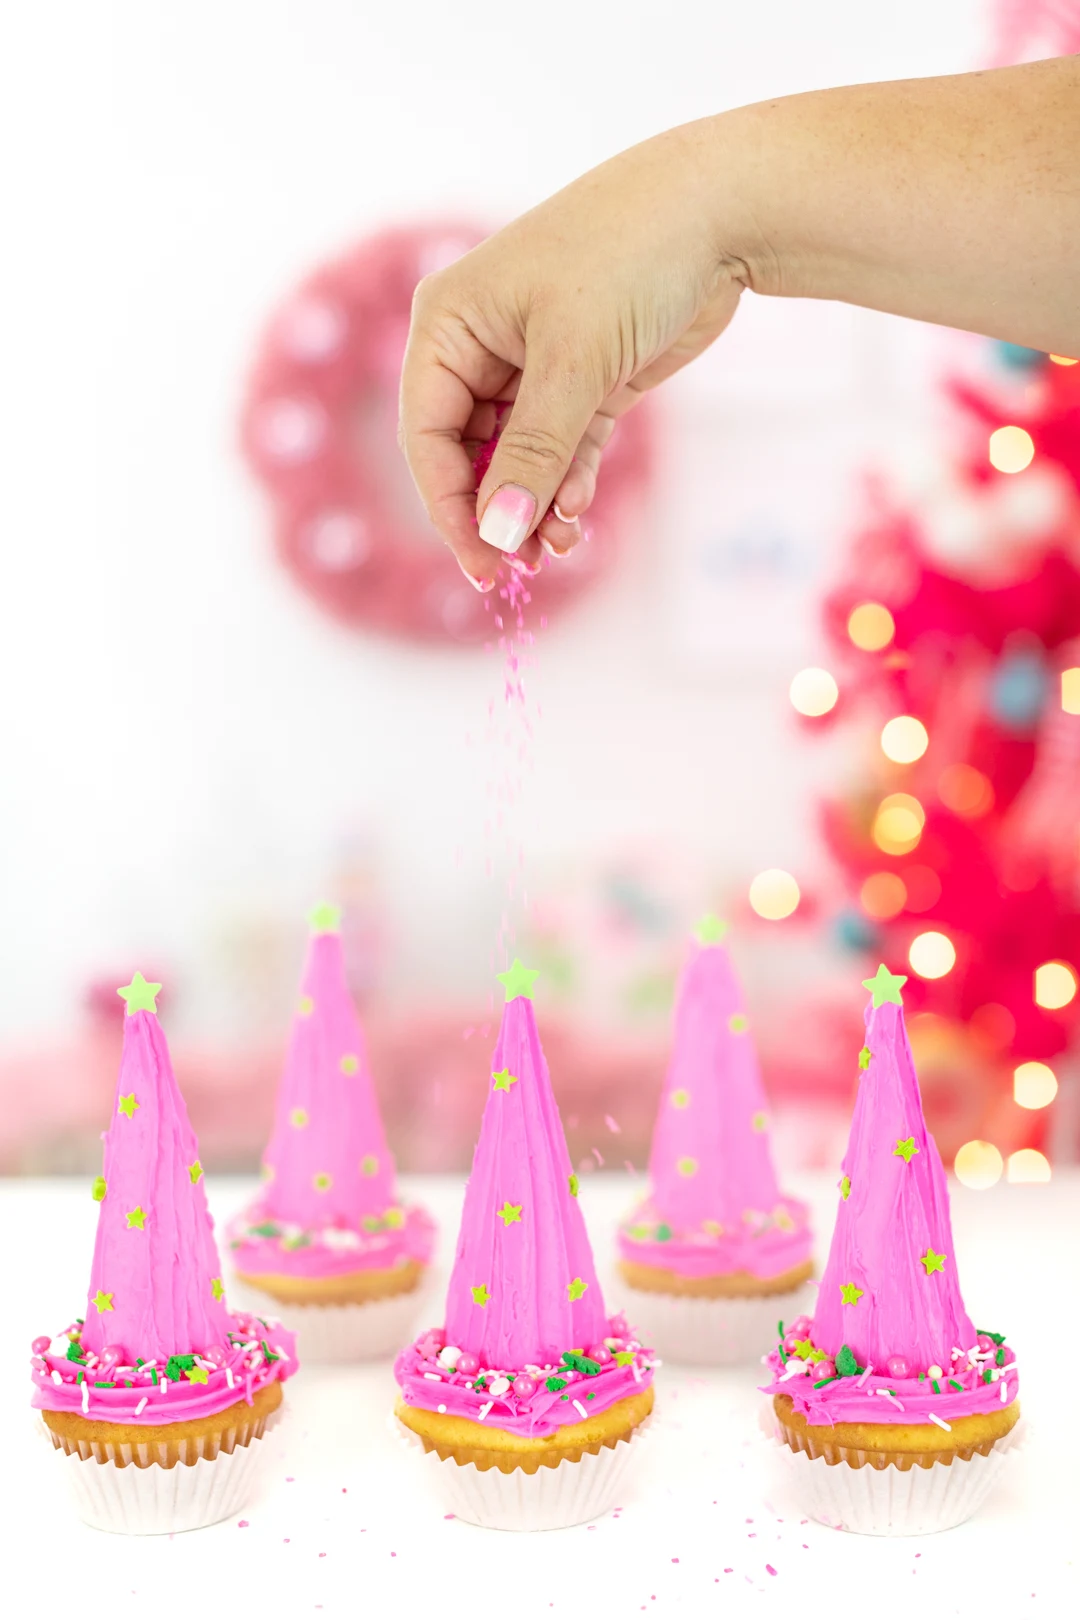 sprinkling pink sugar crystals over pink christmas tree cupcakes